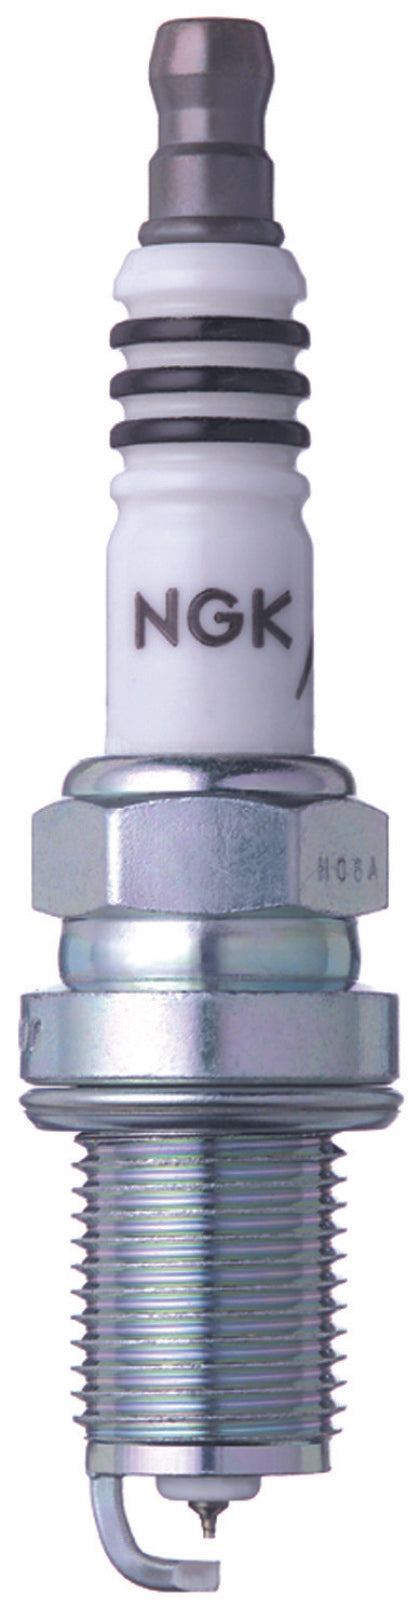 NGK Iridium Spark Plugs - Heat Range 6, 7, 8 or 9 - Nissan 300ZX Z32